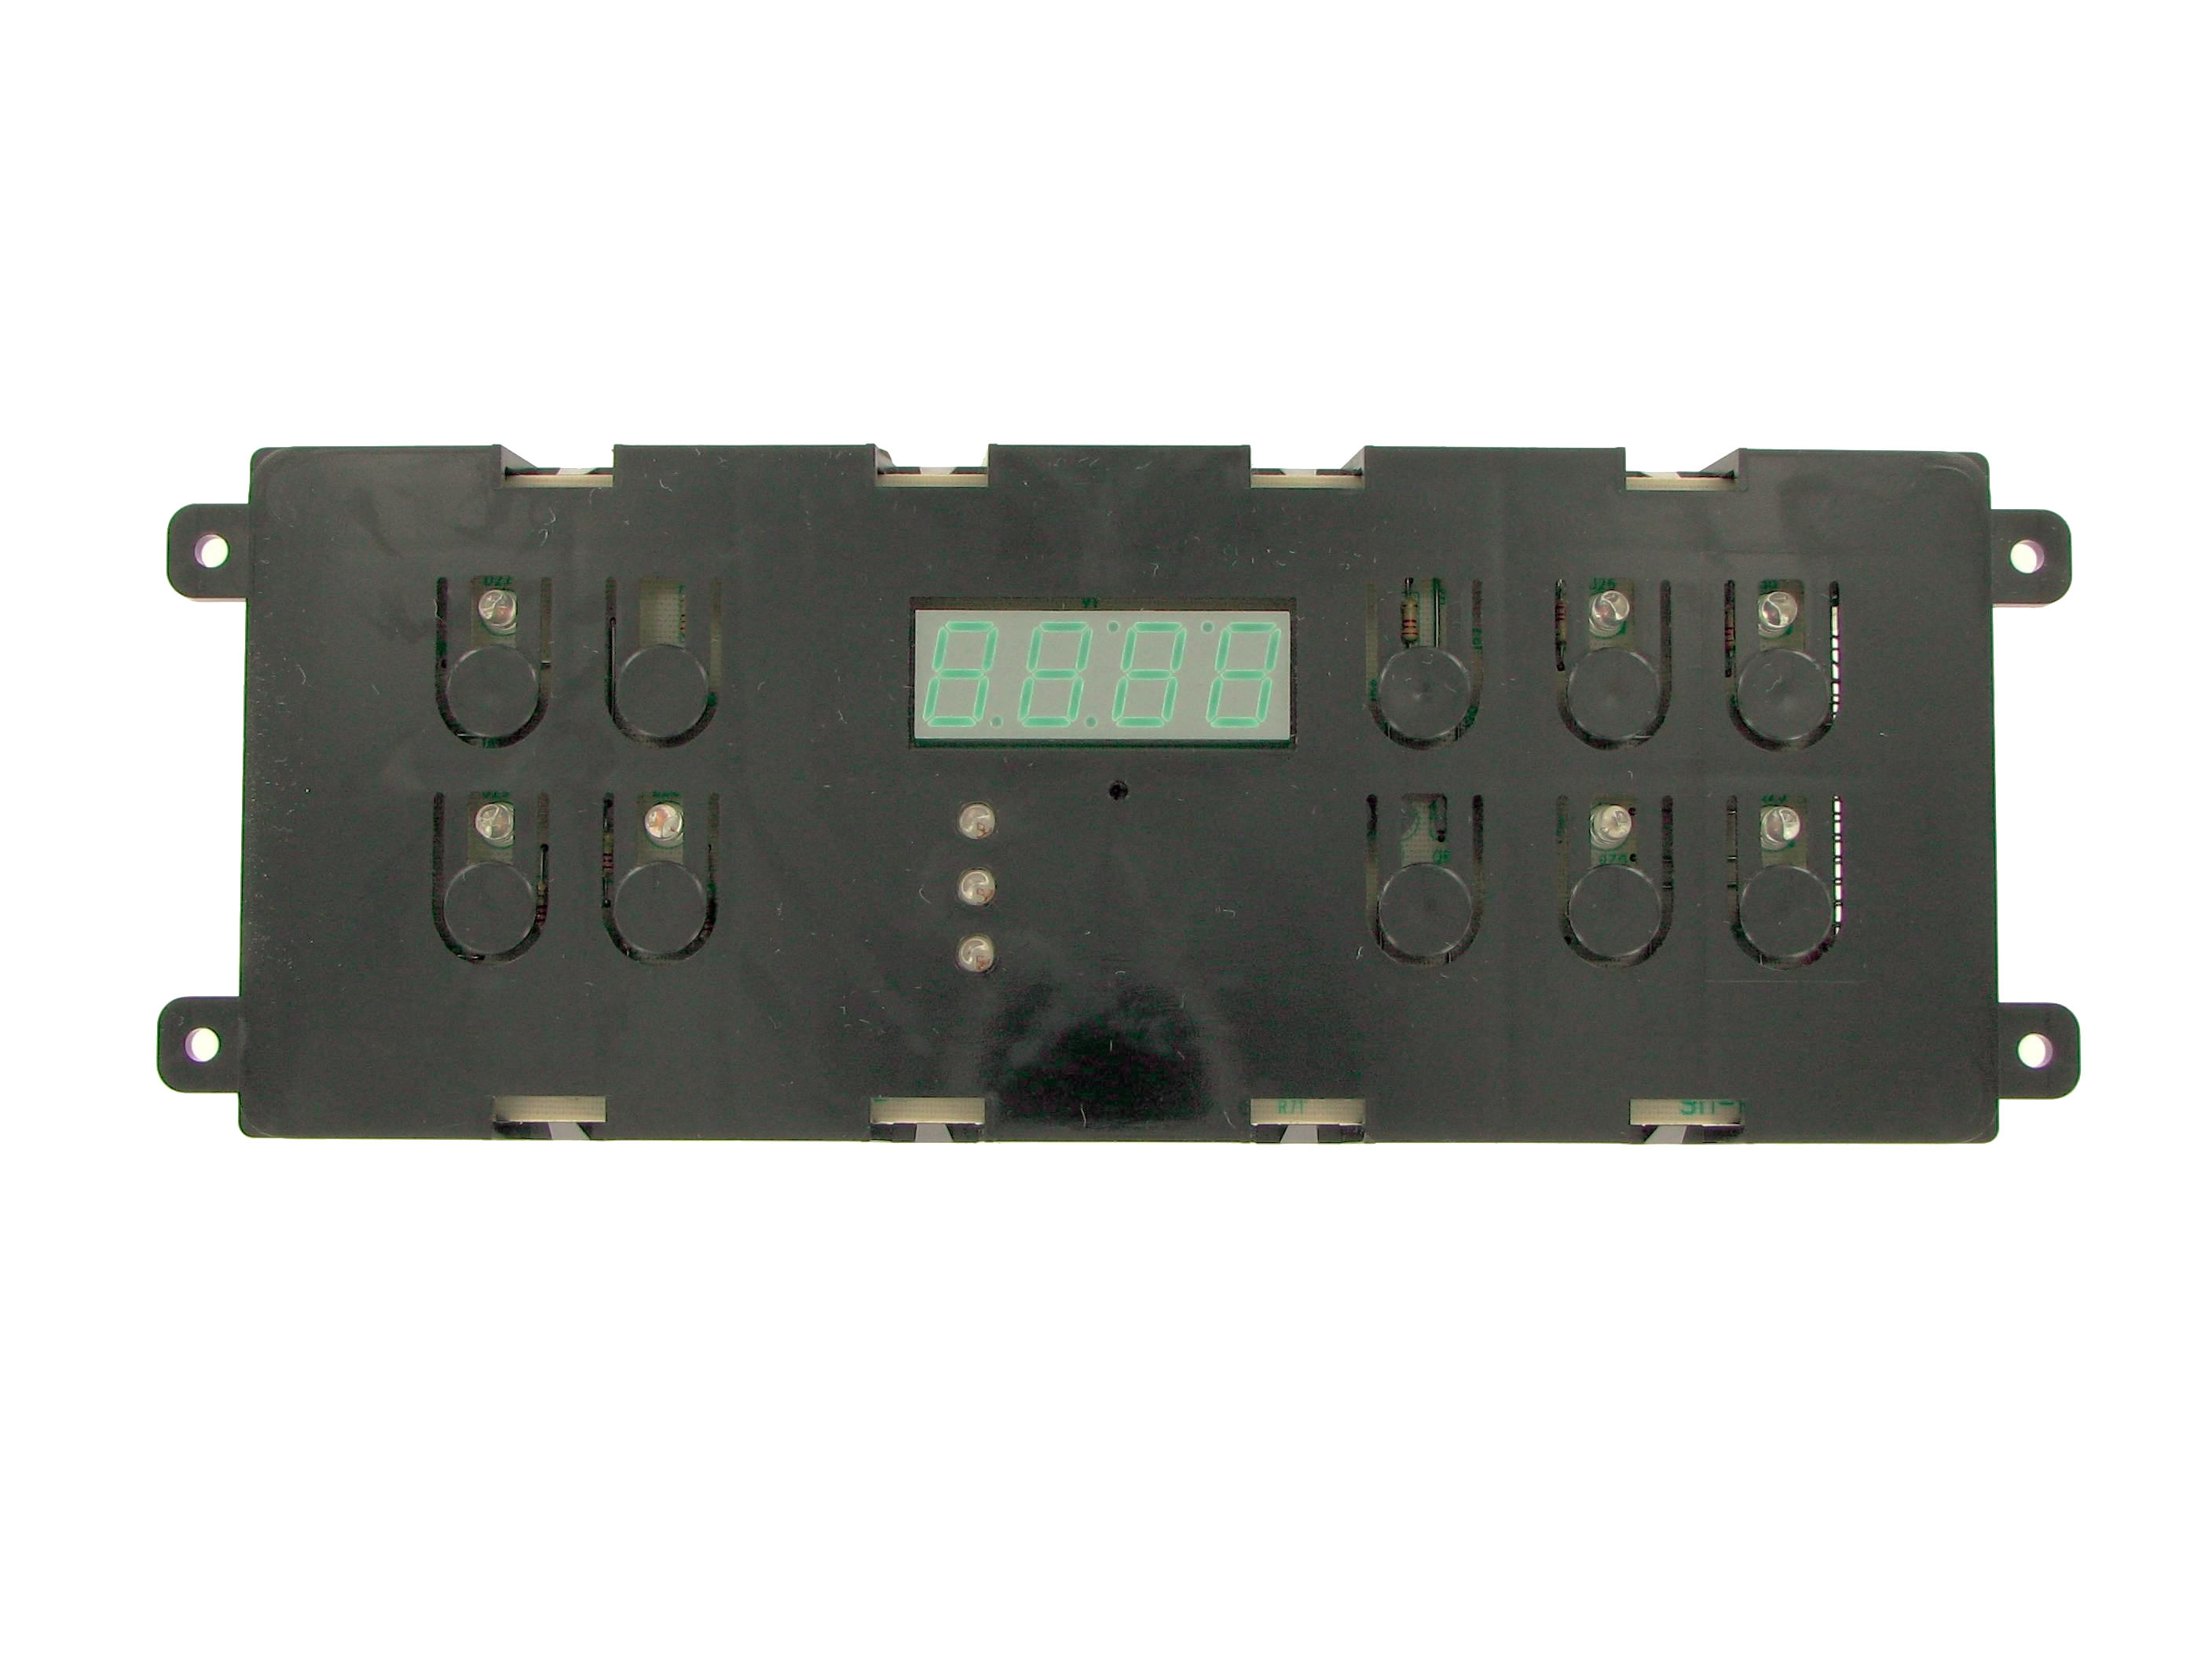 Frigidaire 316207506 Range Oven Control Board working Guaranteed 